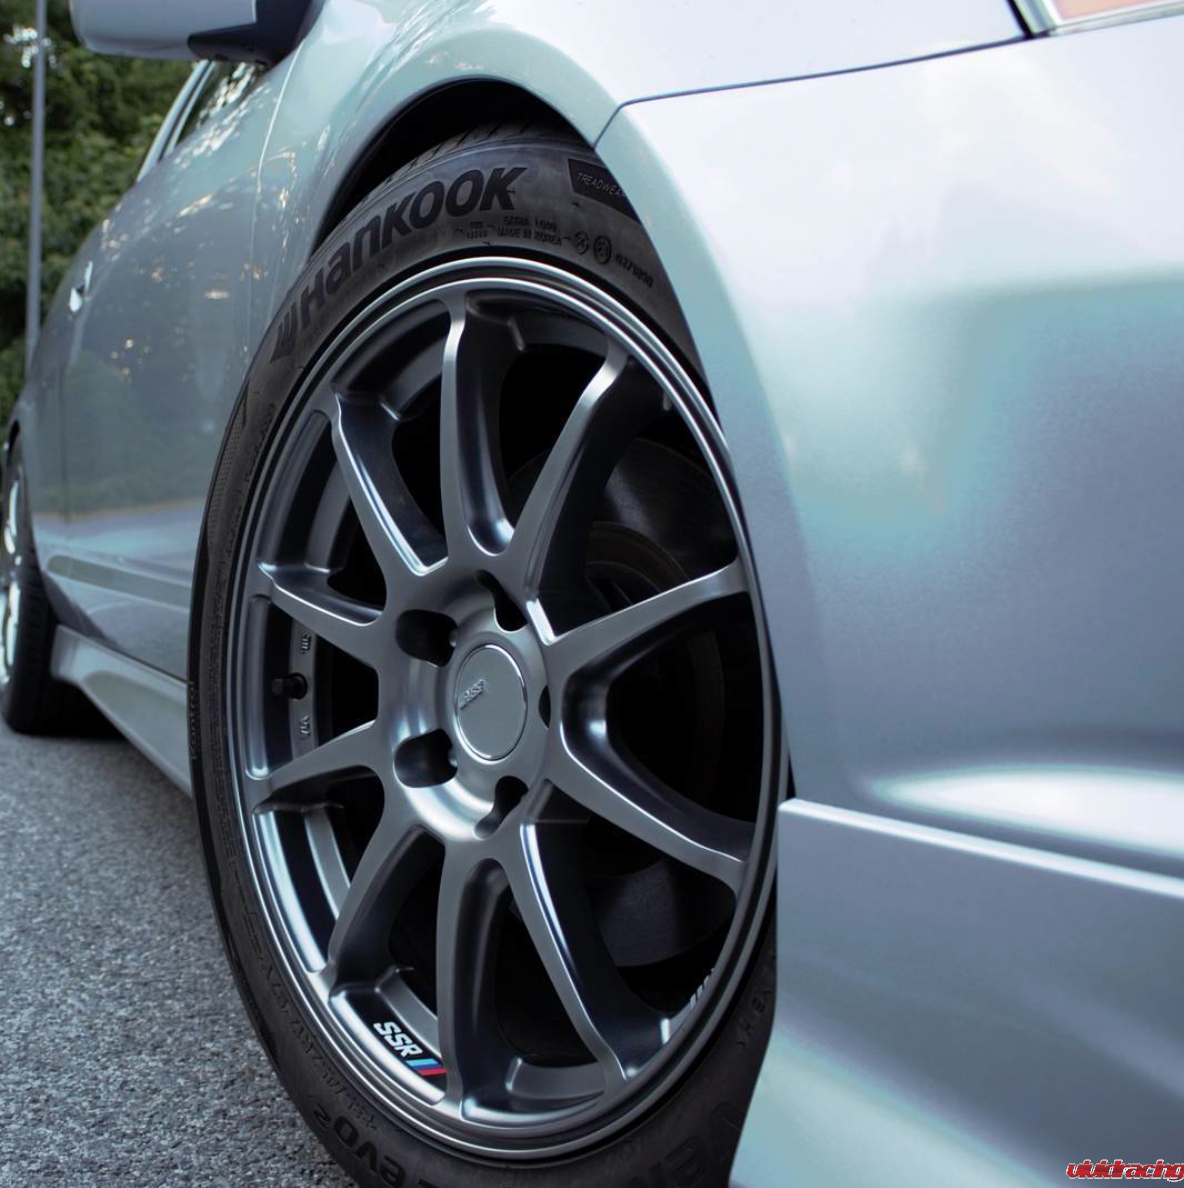 Acura RSX Type S, SSR wheels, GTV02, Buddy Club Racing Spec damper kit